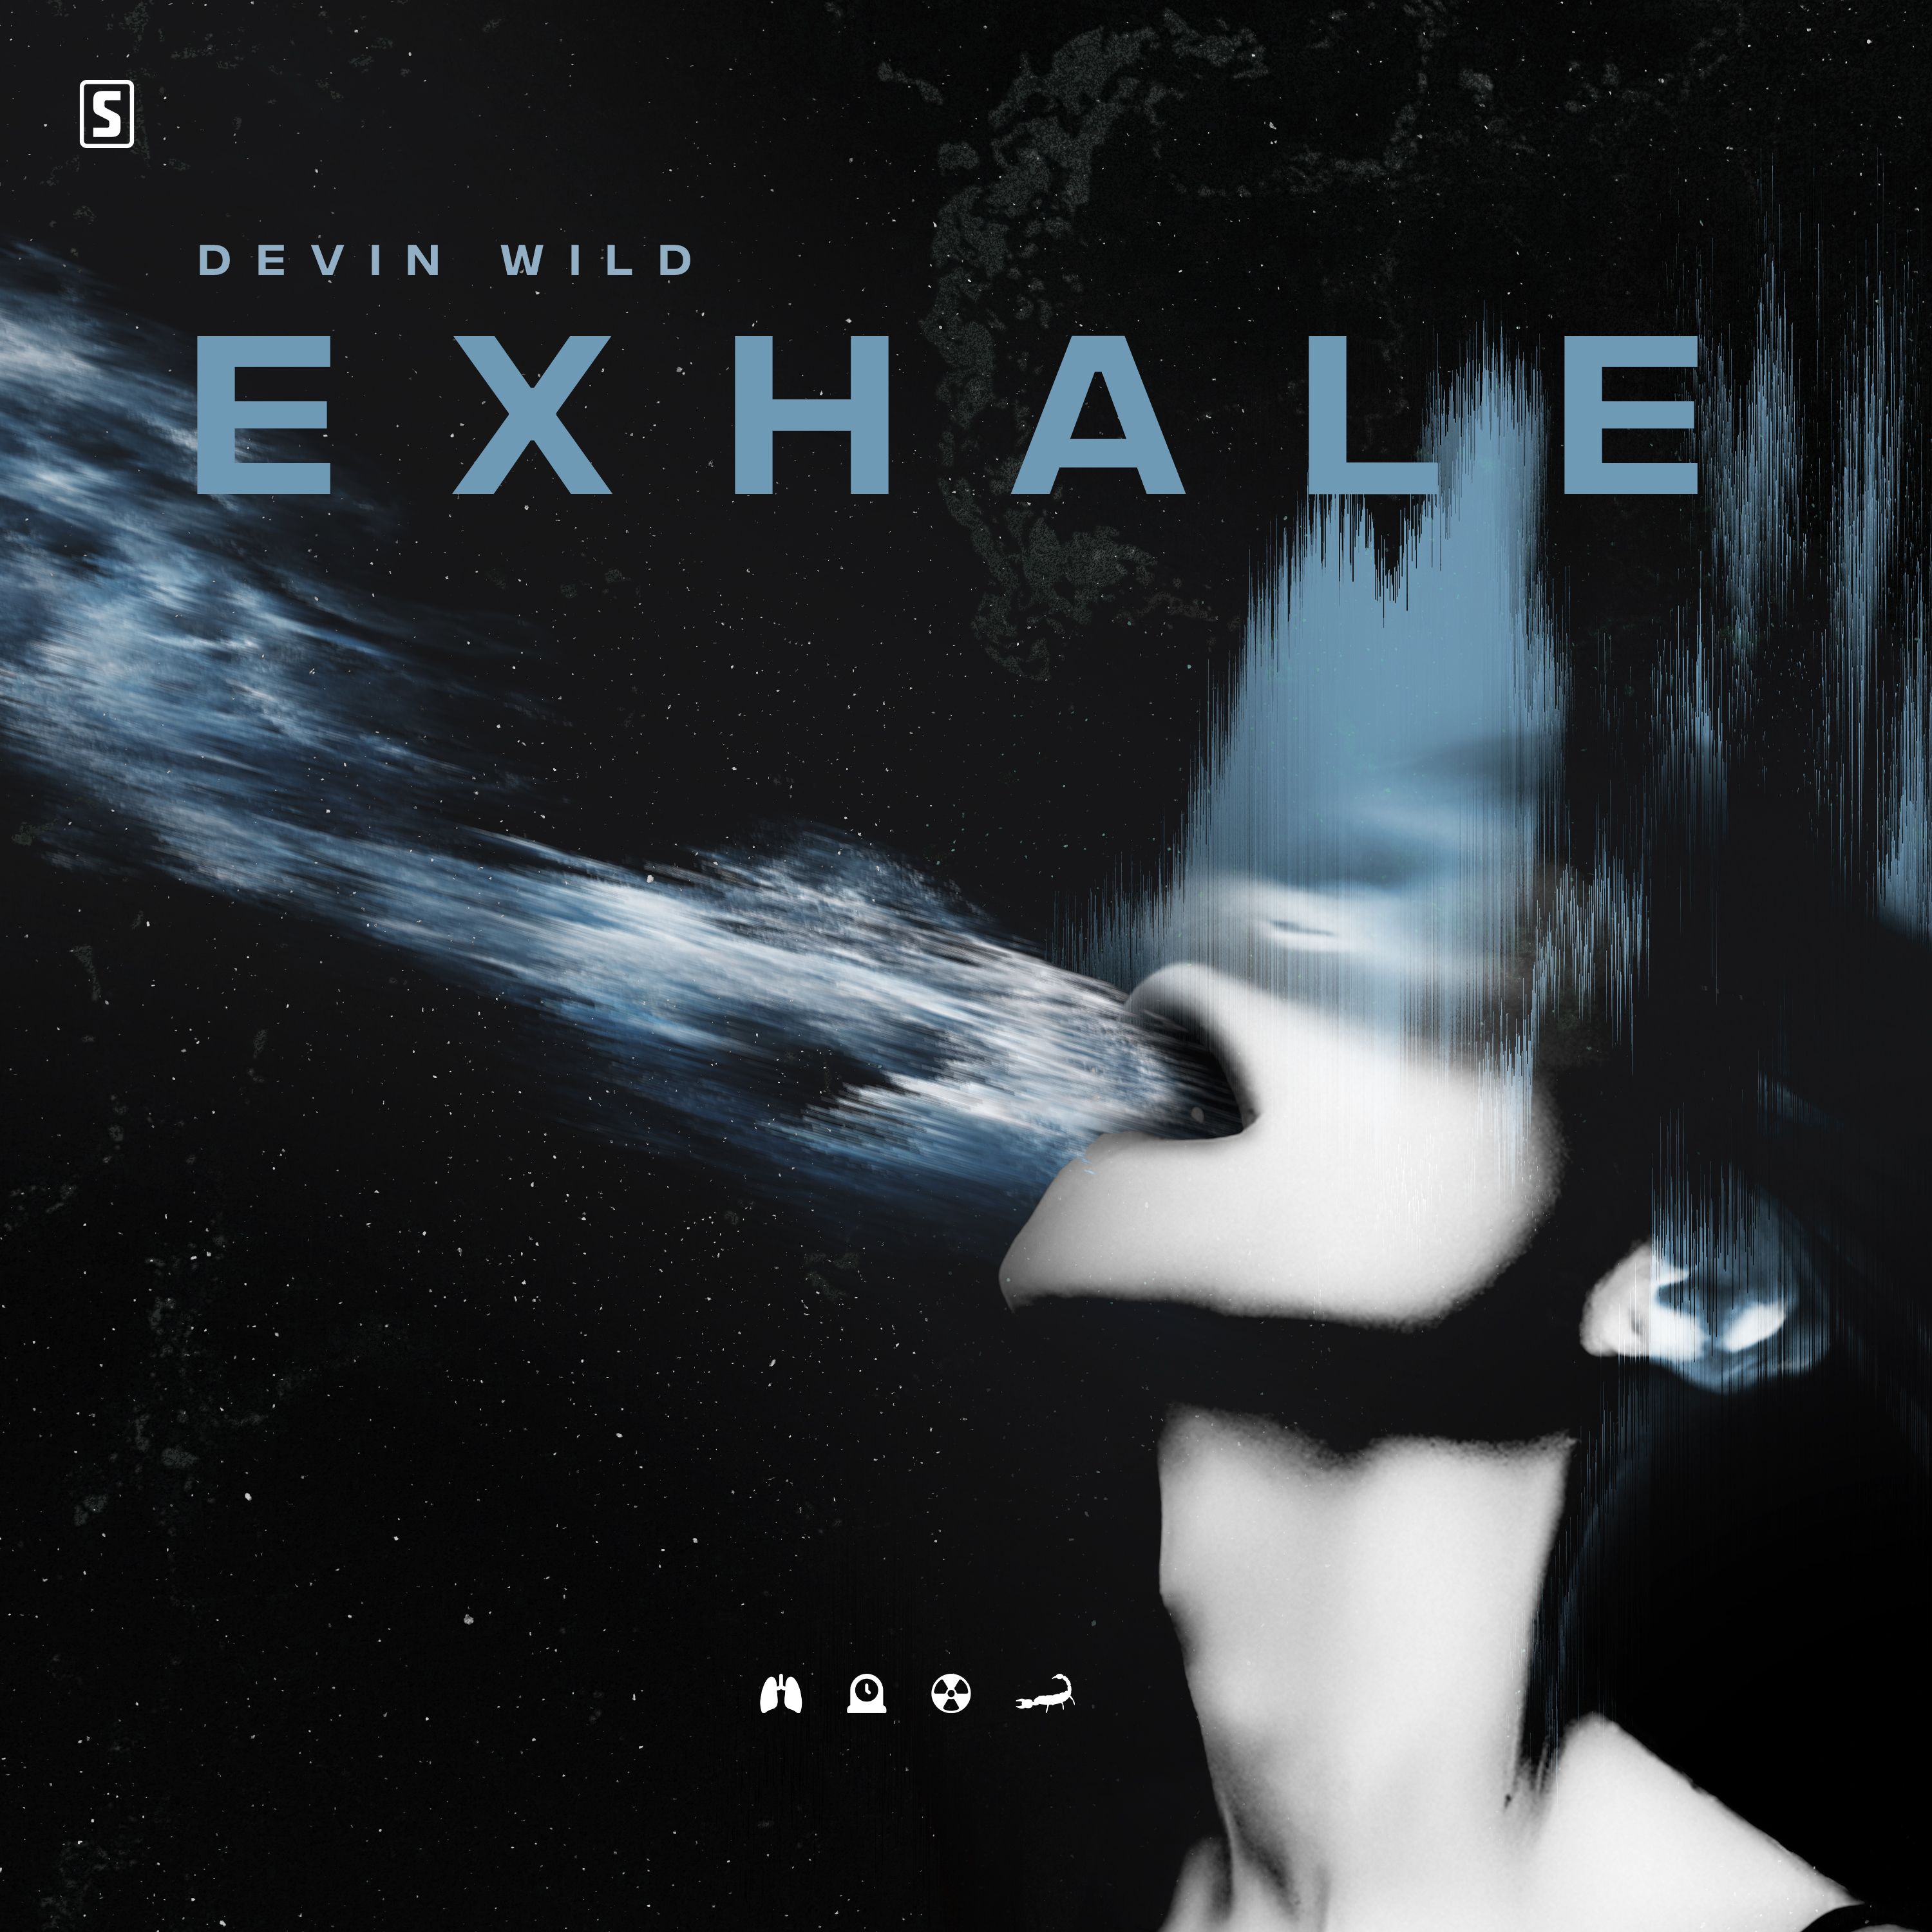 Devin Wild Exhale EP cover artwork